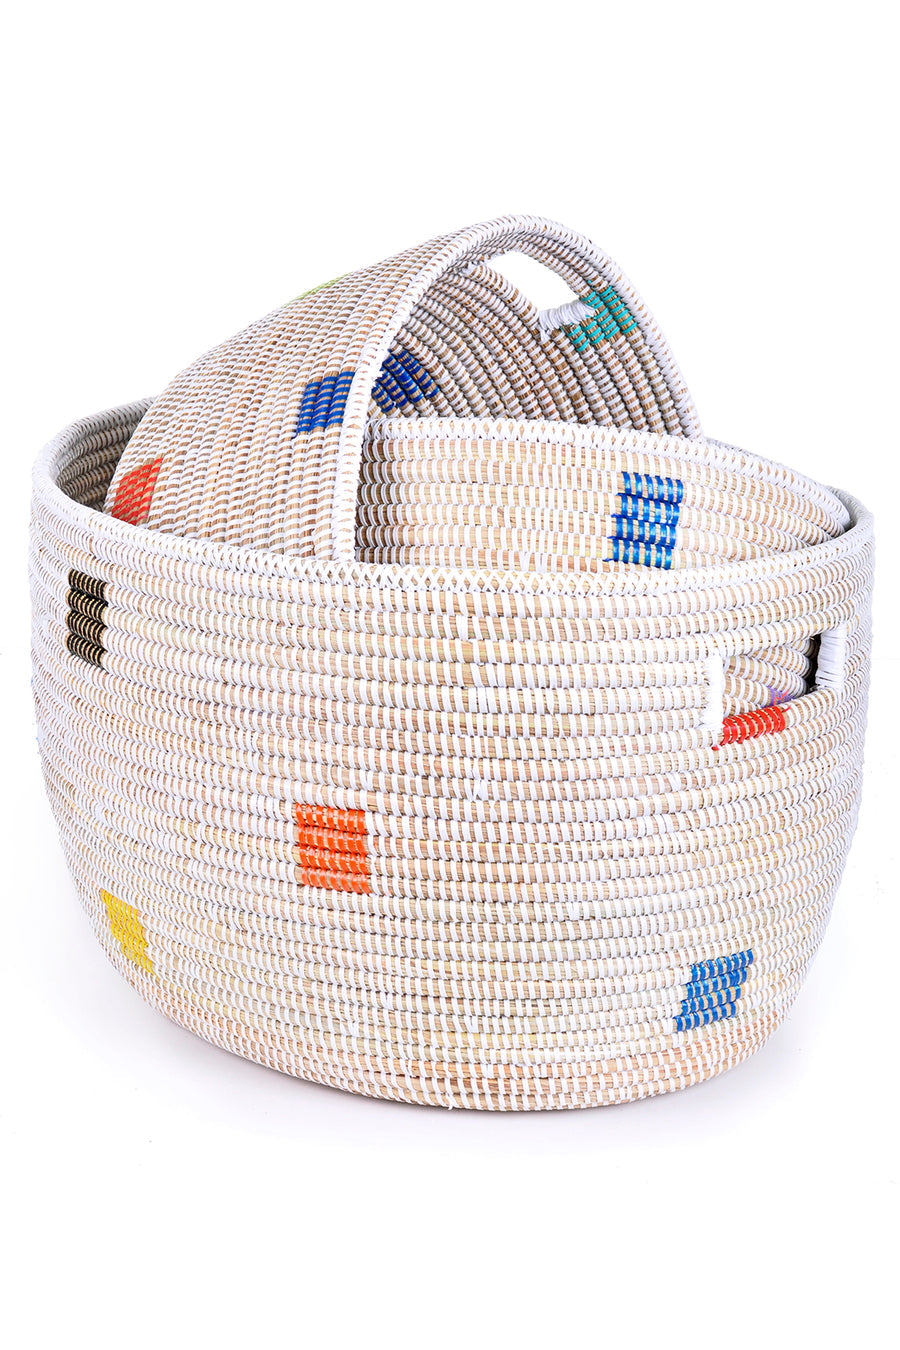 "Prismatic Pixels" Nesting Baskets (Set of Three)